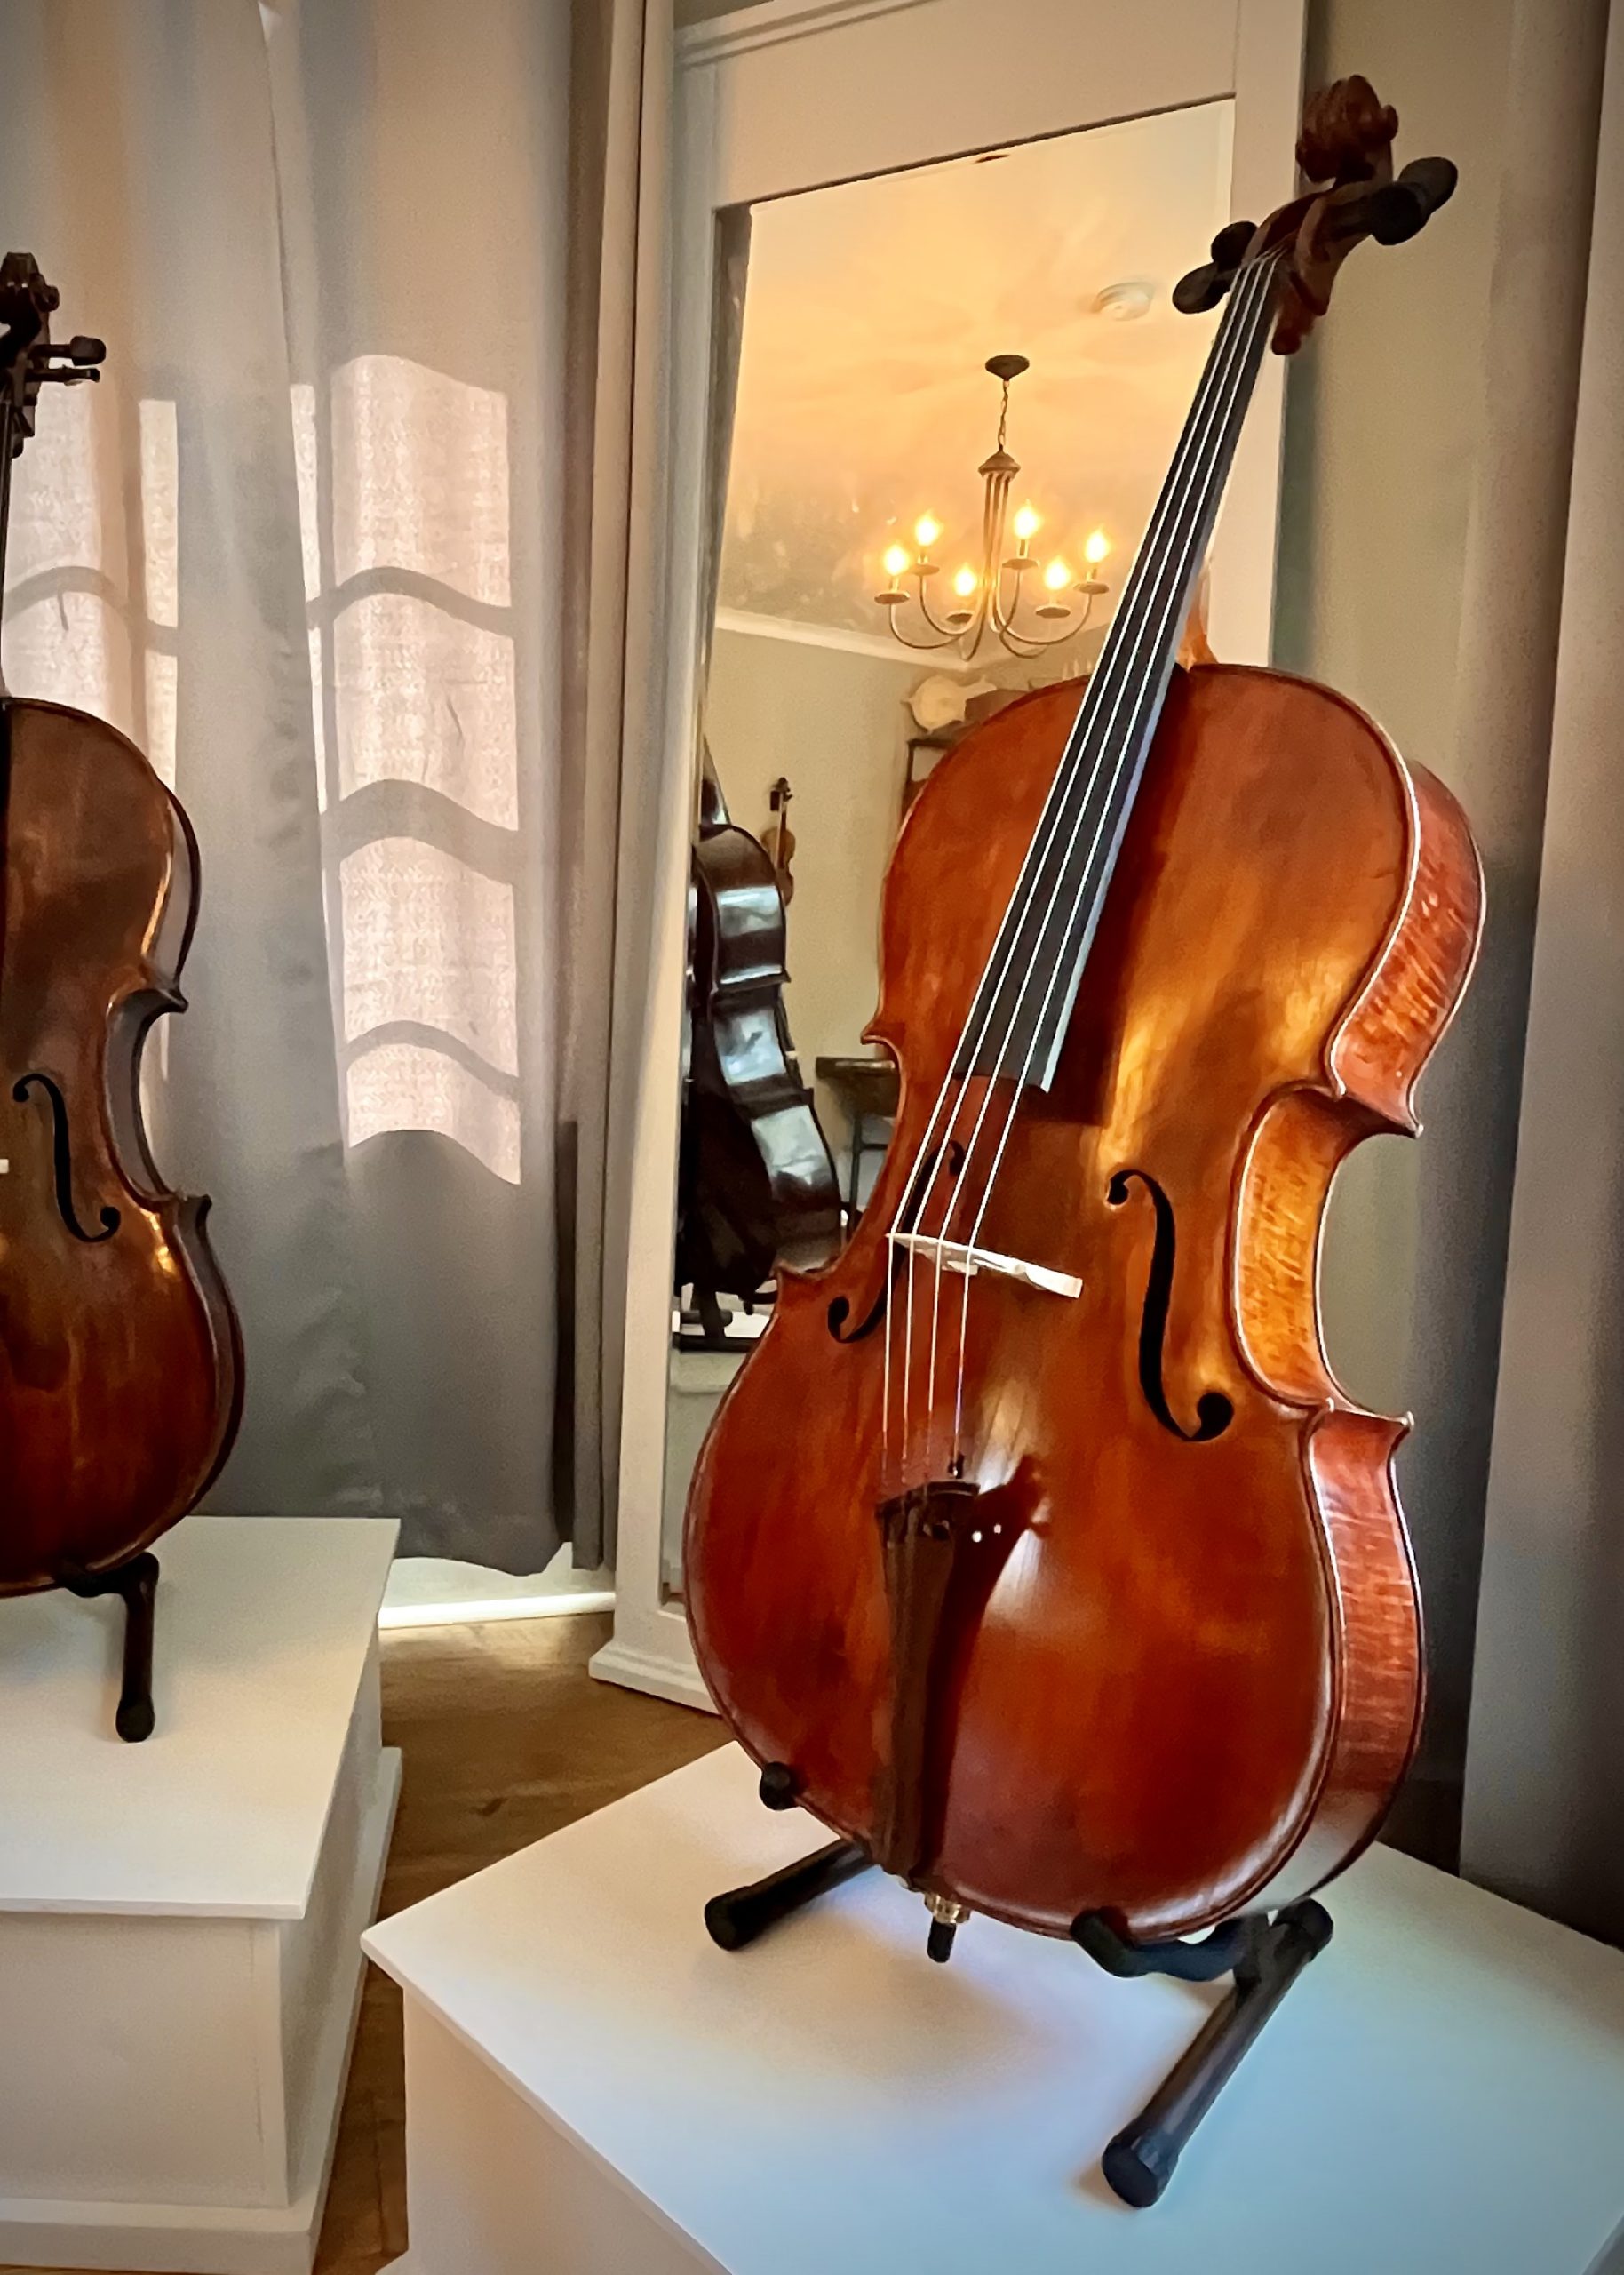 Old Instrument at the Violin Gallery in St. George Utah